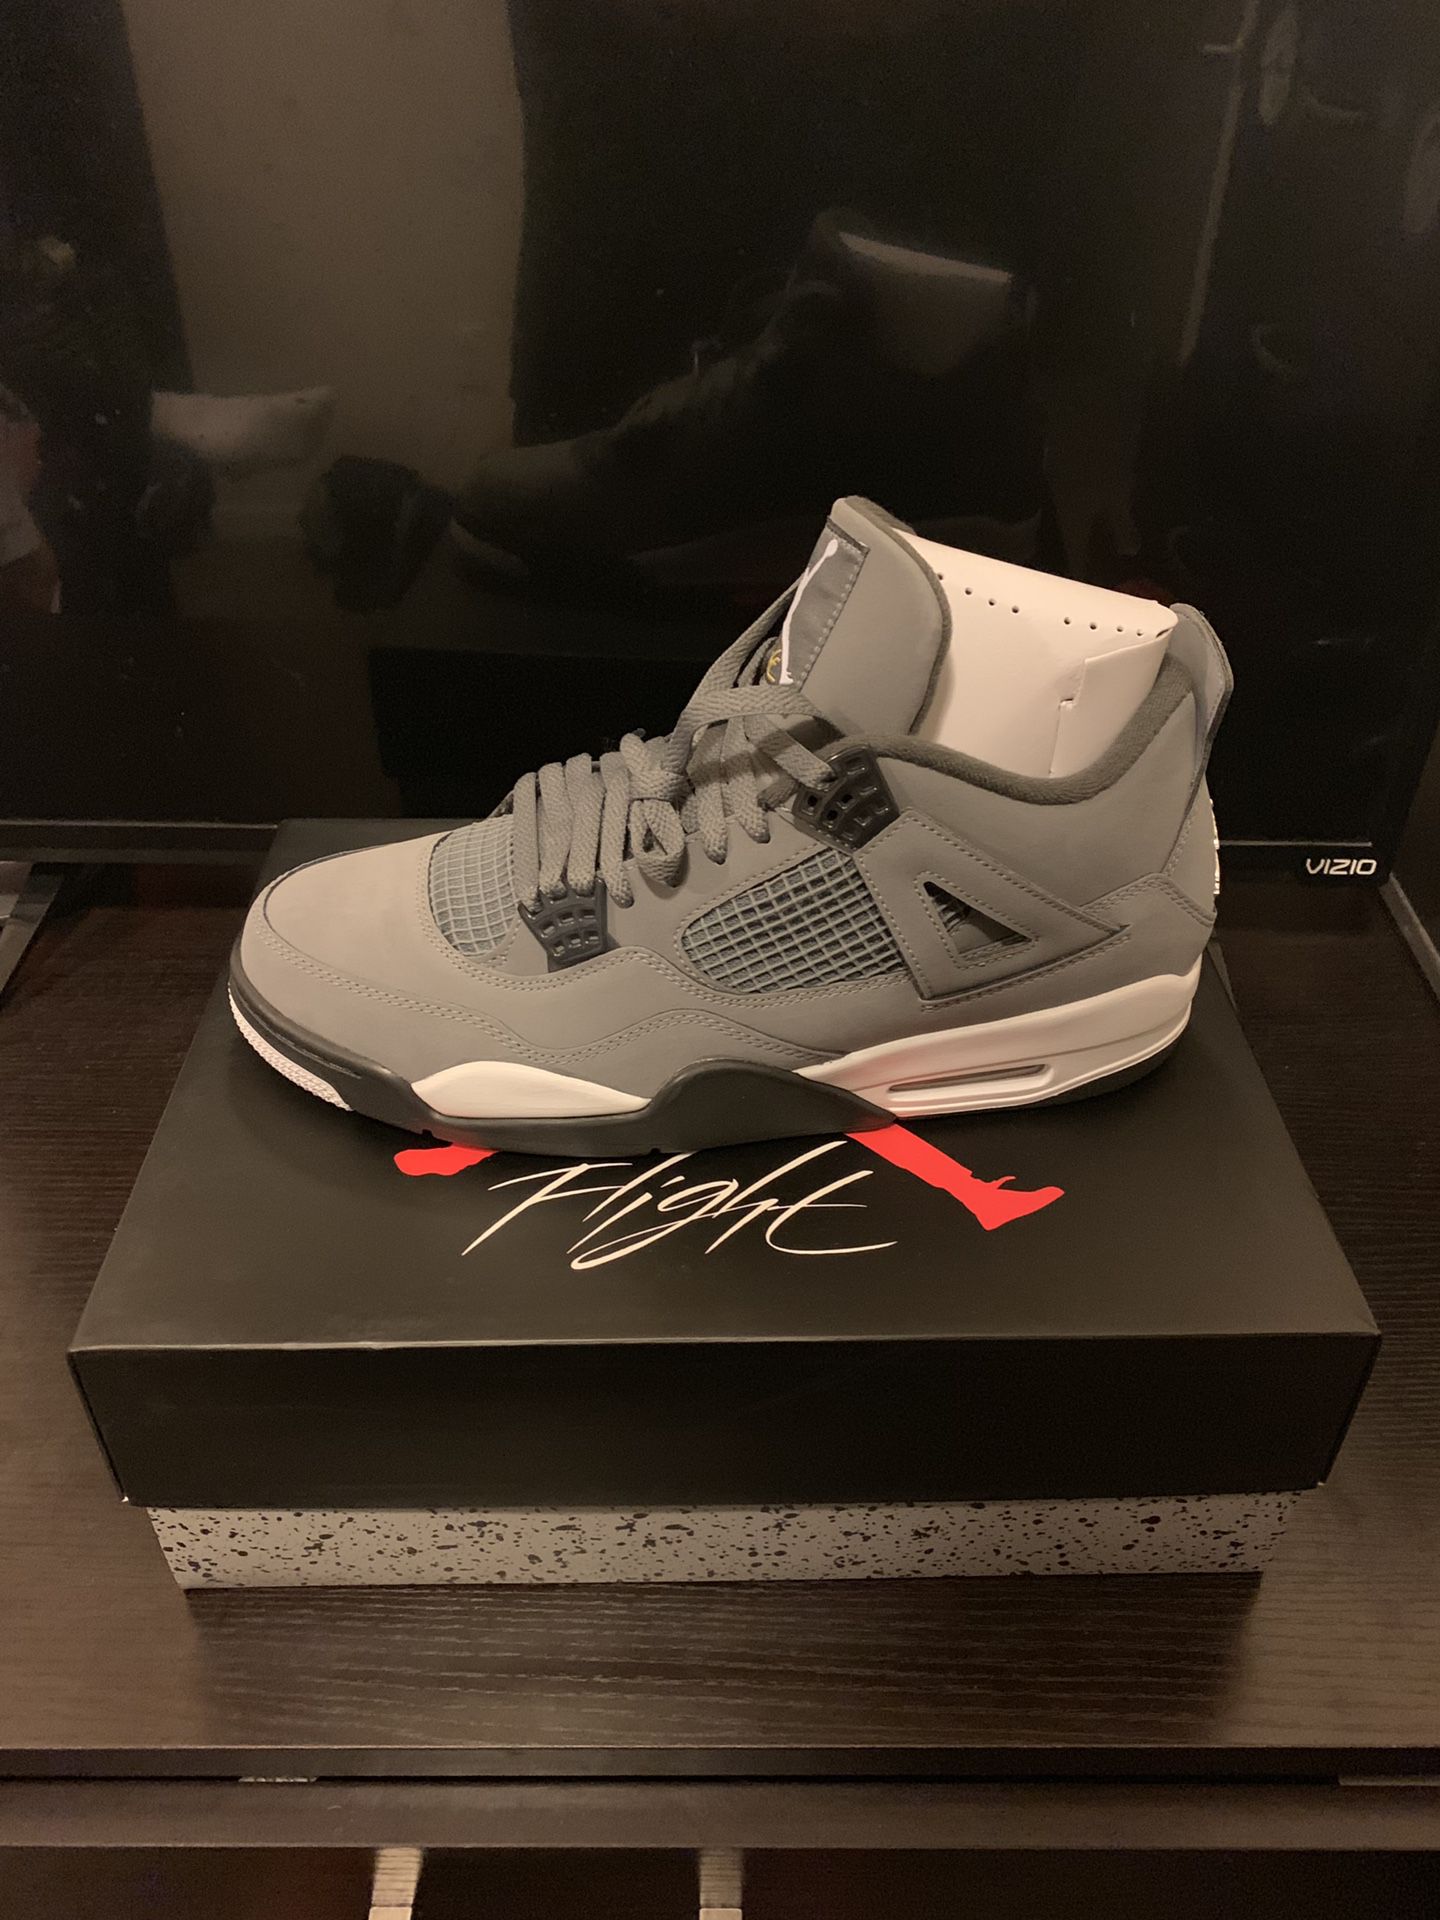 Jordan 4 Cool Grey Size 12